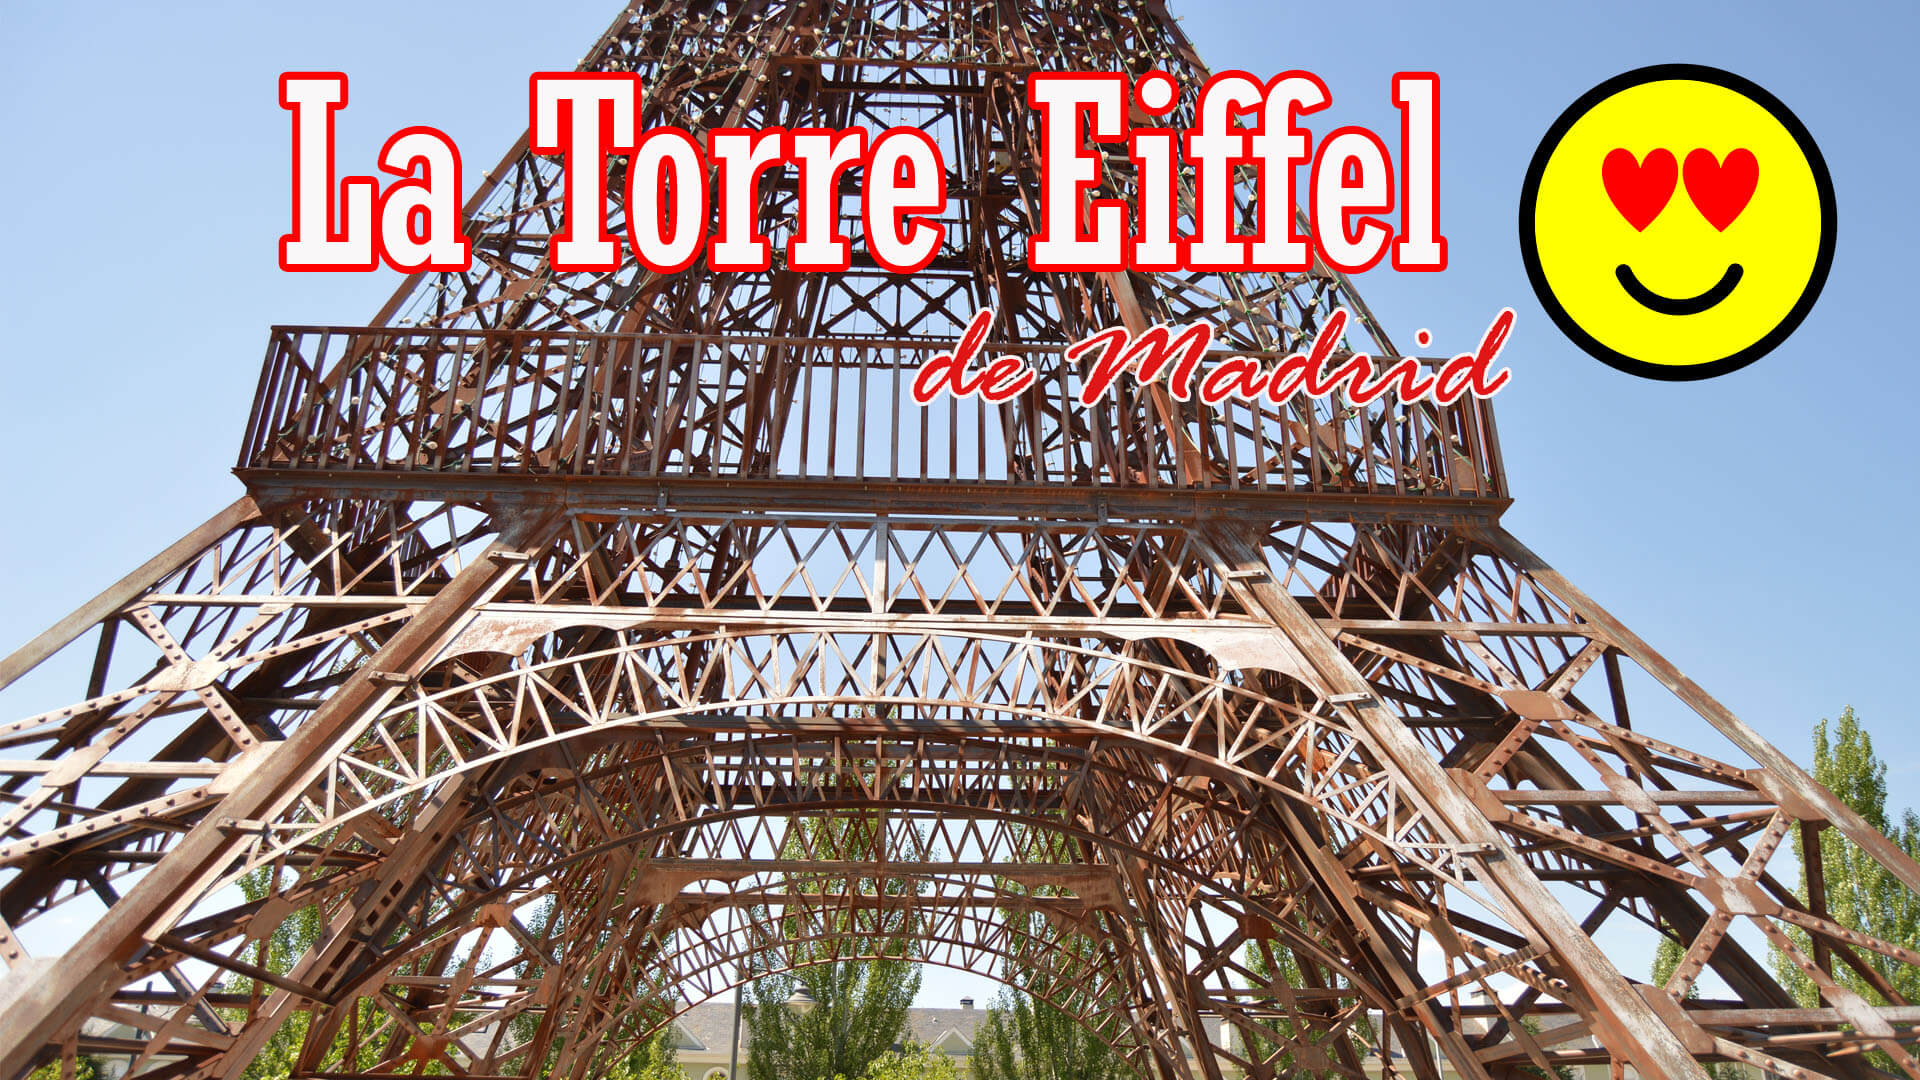 Torre Eiffel en Madrid - Parque Europa Madrid 